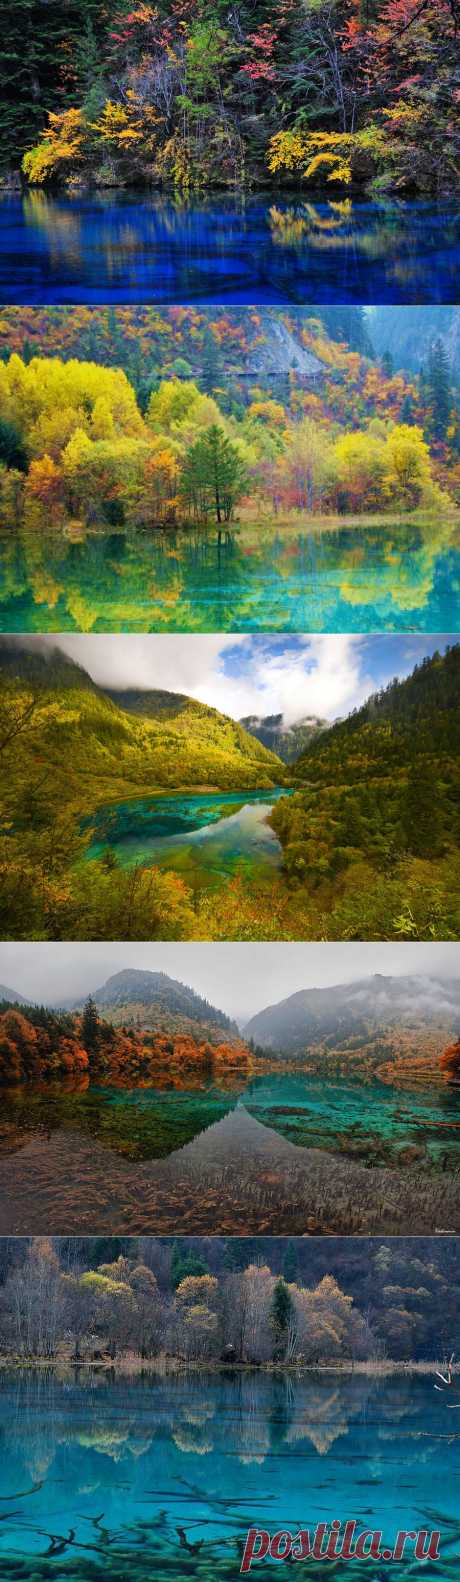 Озеро Пяти Цветков в Цзючжайгоу, Китай | Newpix.ru - позитивный -журнал